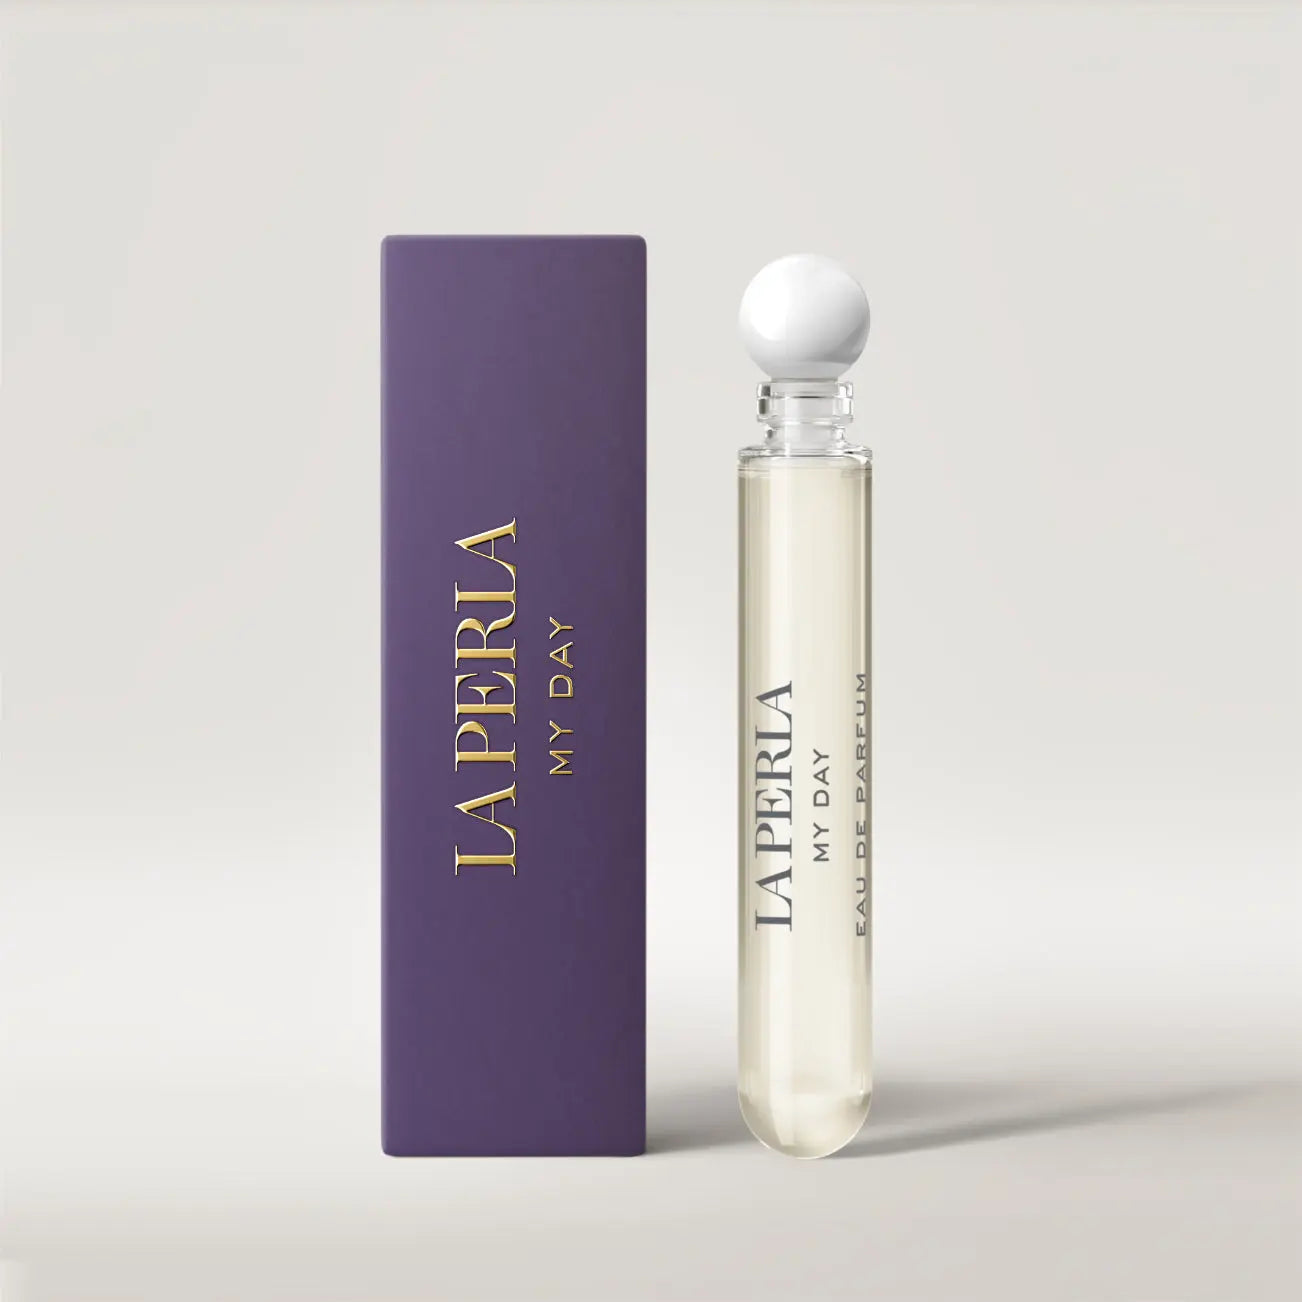 La Perla My Day Eau de Parfum Sample 2ml Fragrance Gift